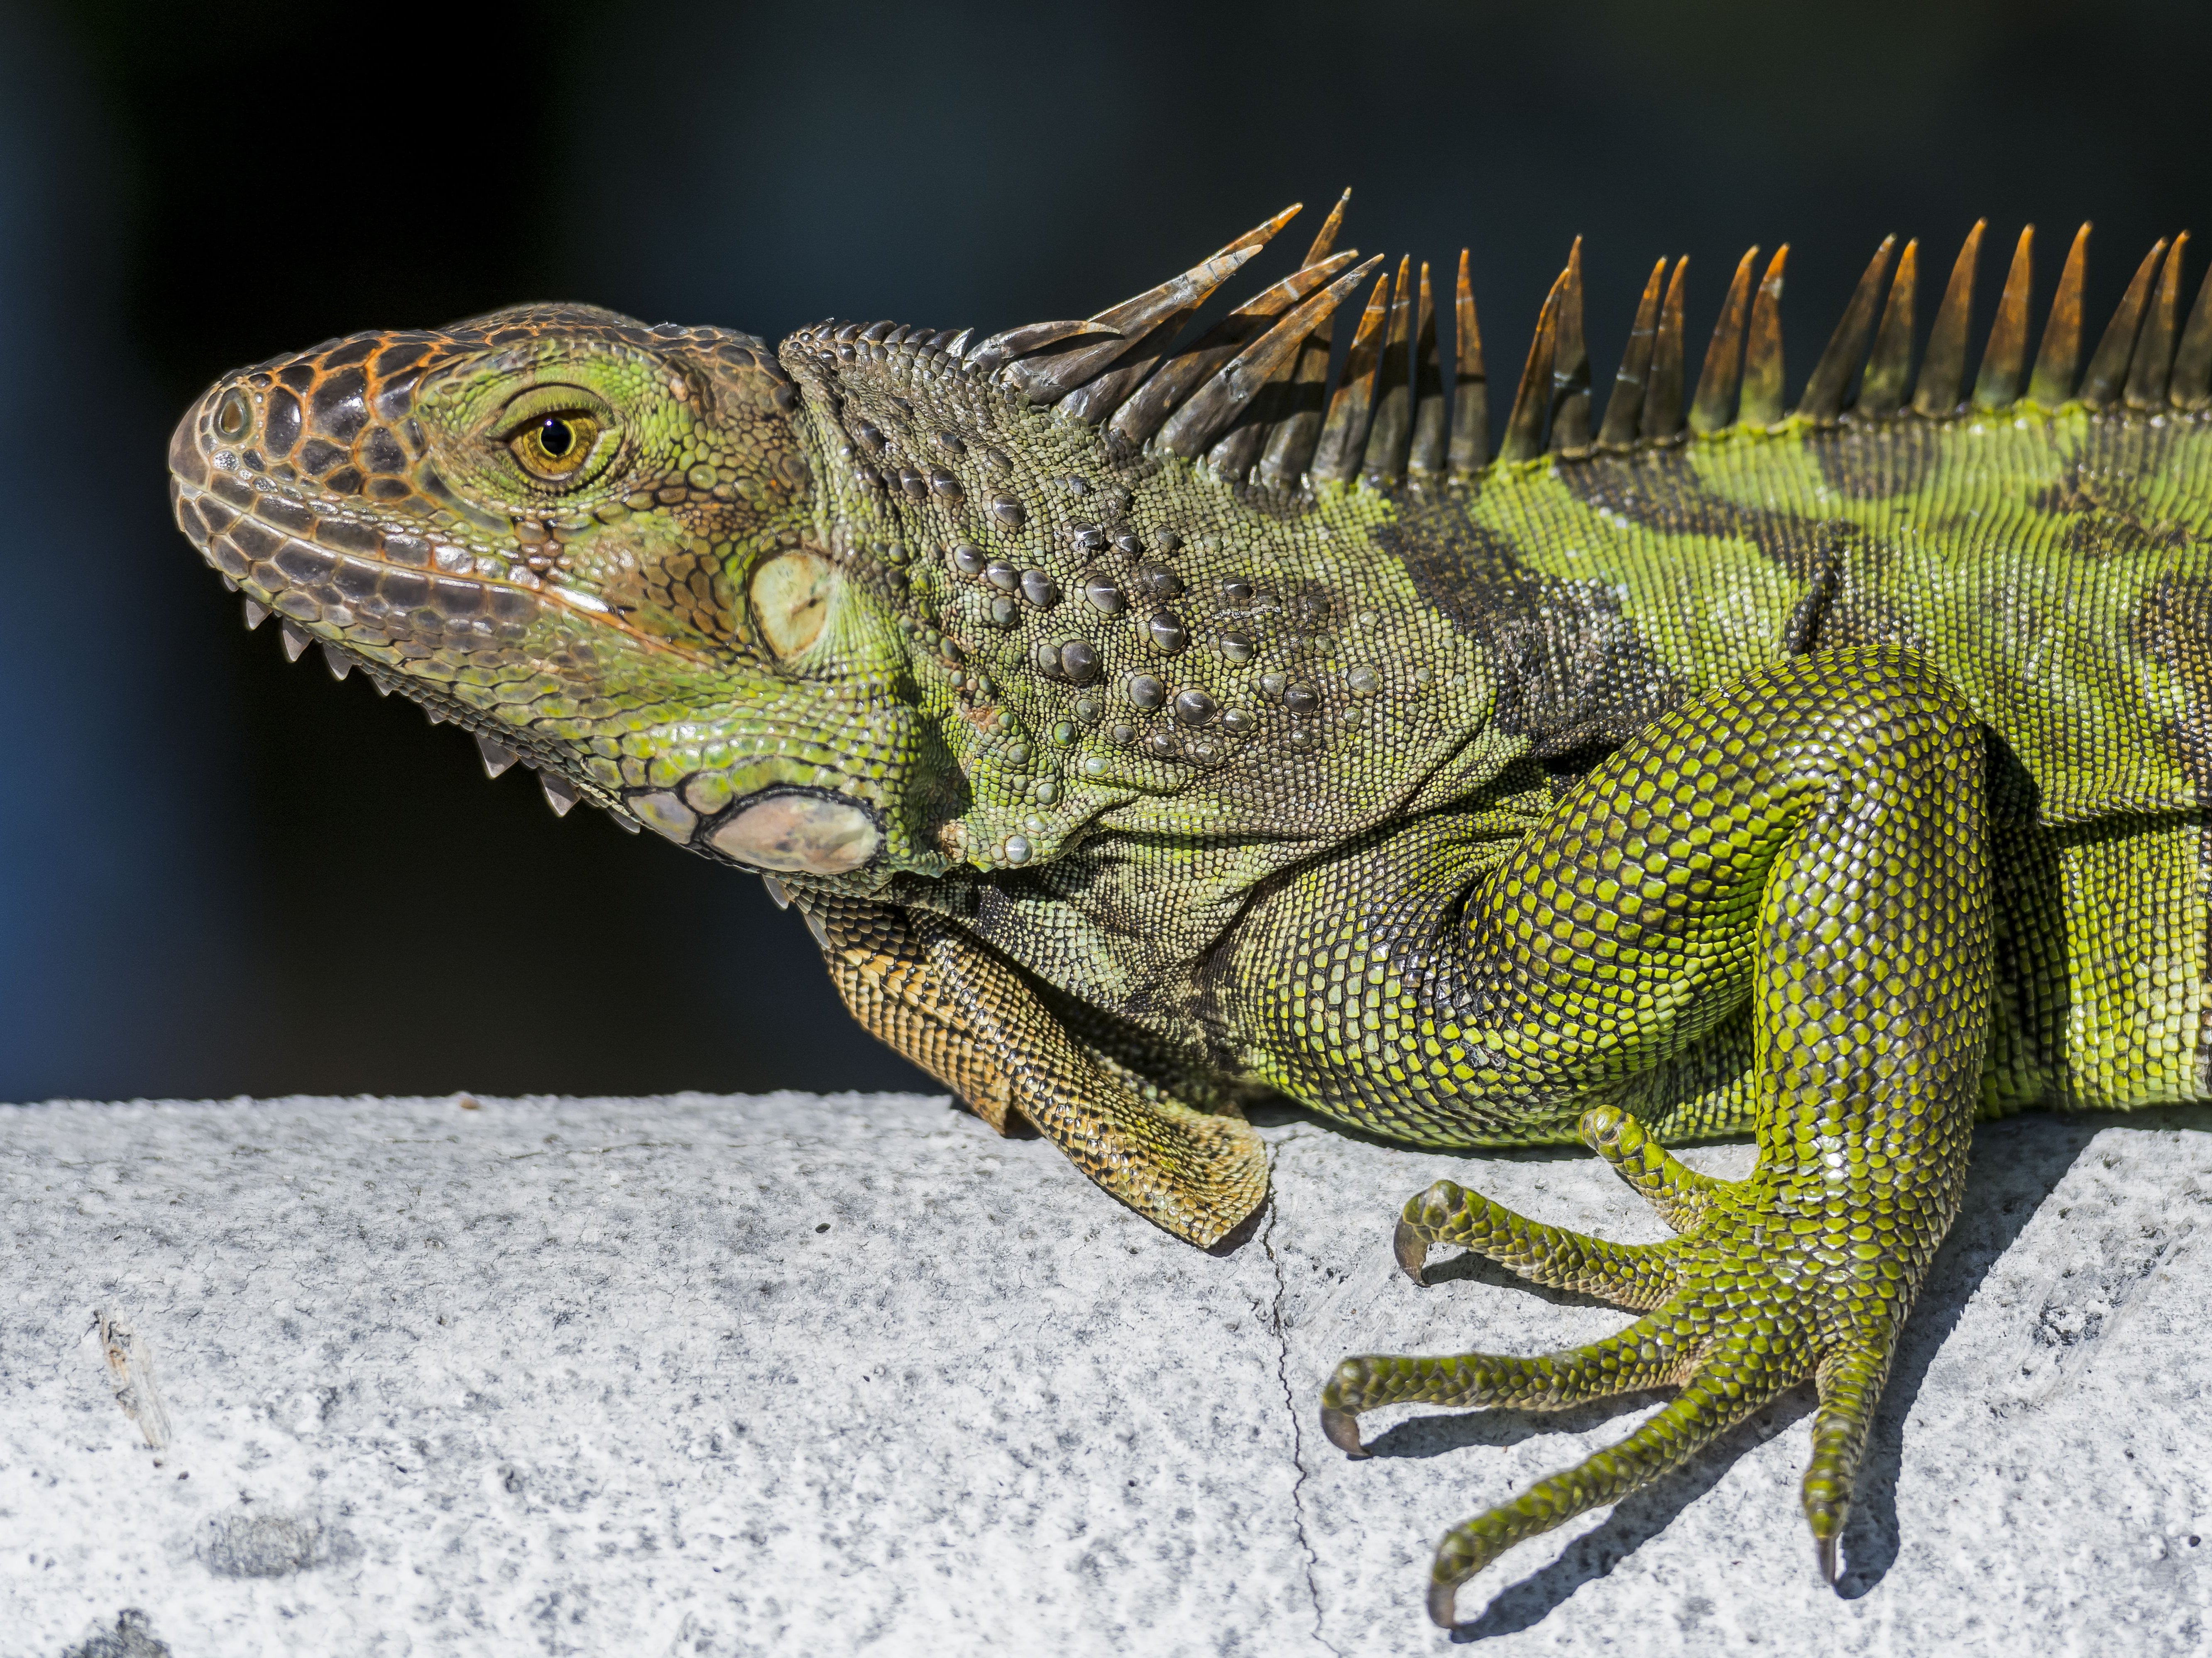 An iguana in Florida